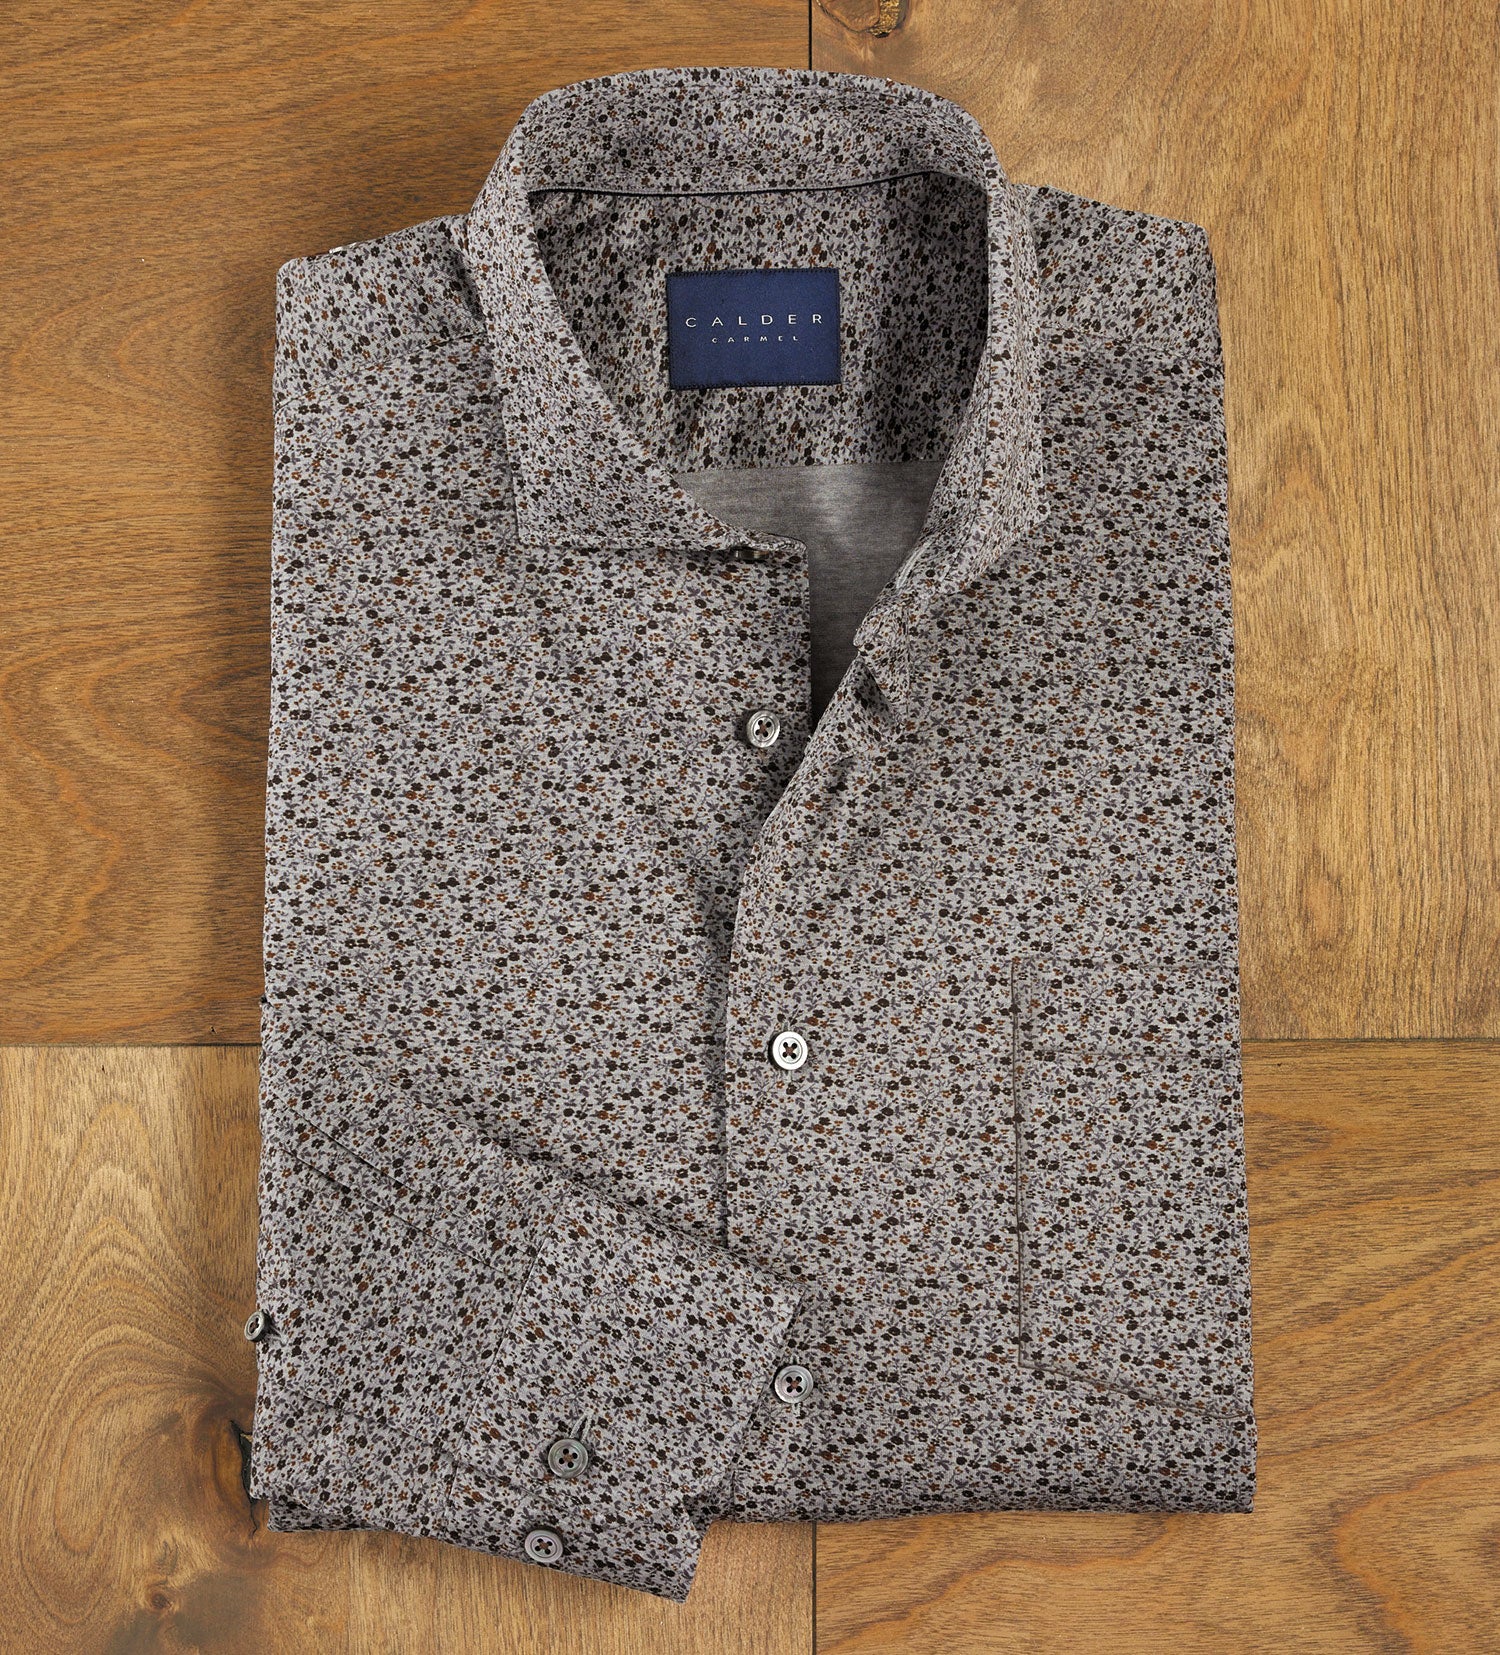 Calder Carmel Floral Long Sleeve Knit Shirt – Patrick James